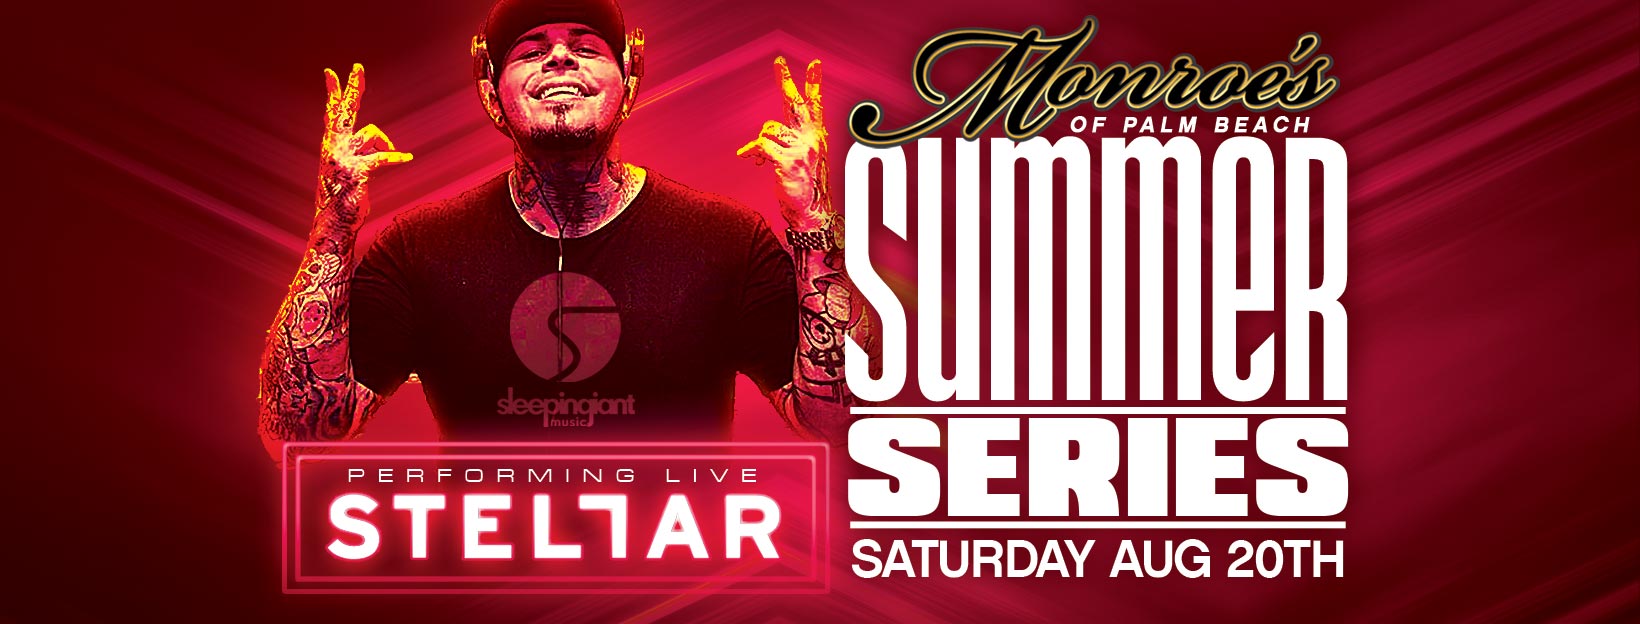 DJ Stellar Performing LIVE at Monroe's Palm Beach Summer Series